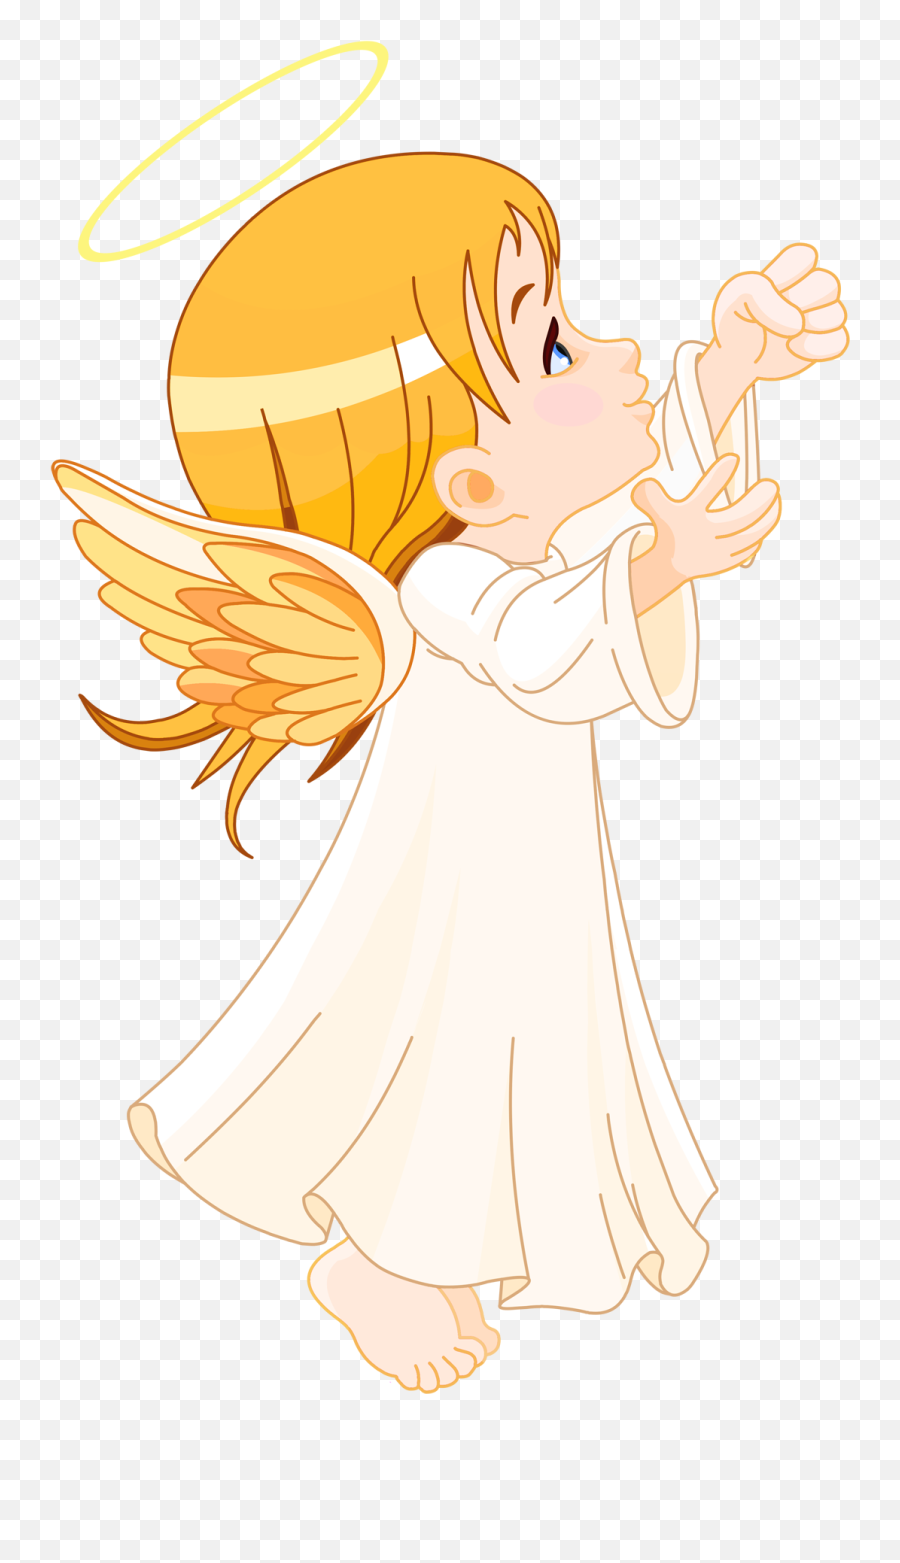 Angel Png Image For Free Download - Little Angel Cartoon,Angel Png - free  transparent png images 